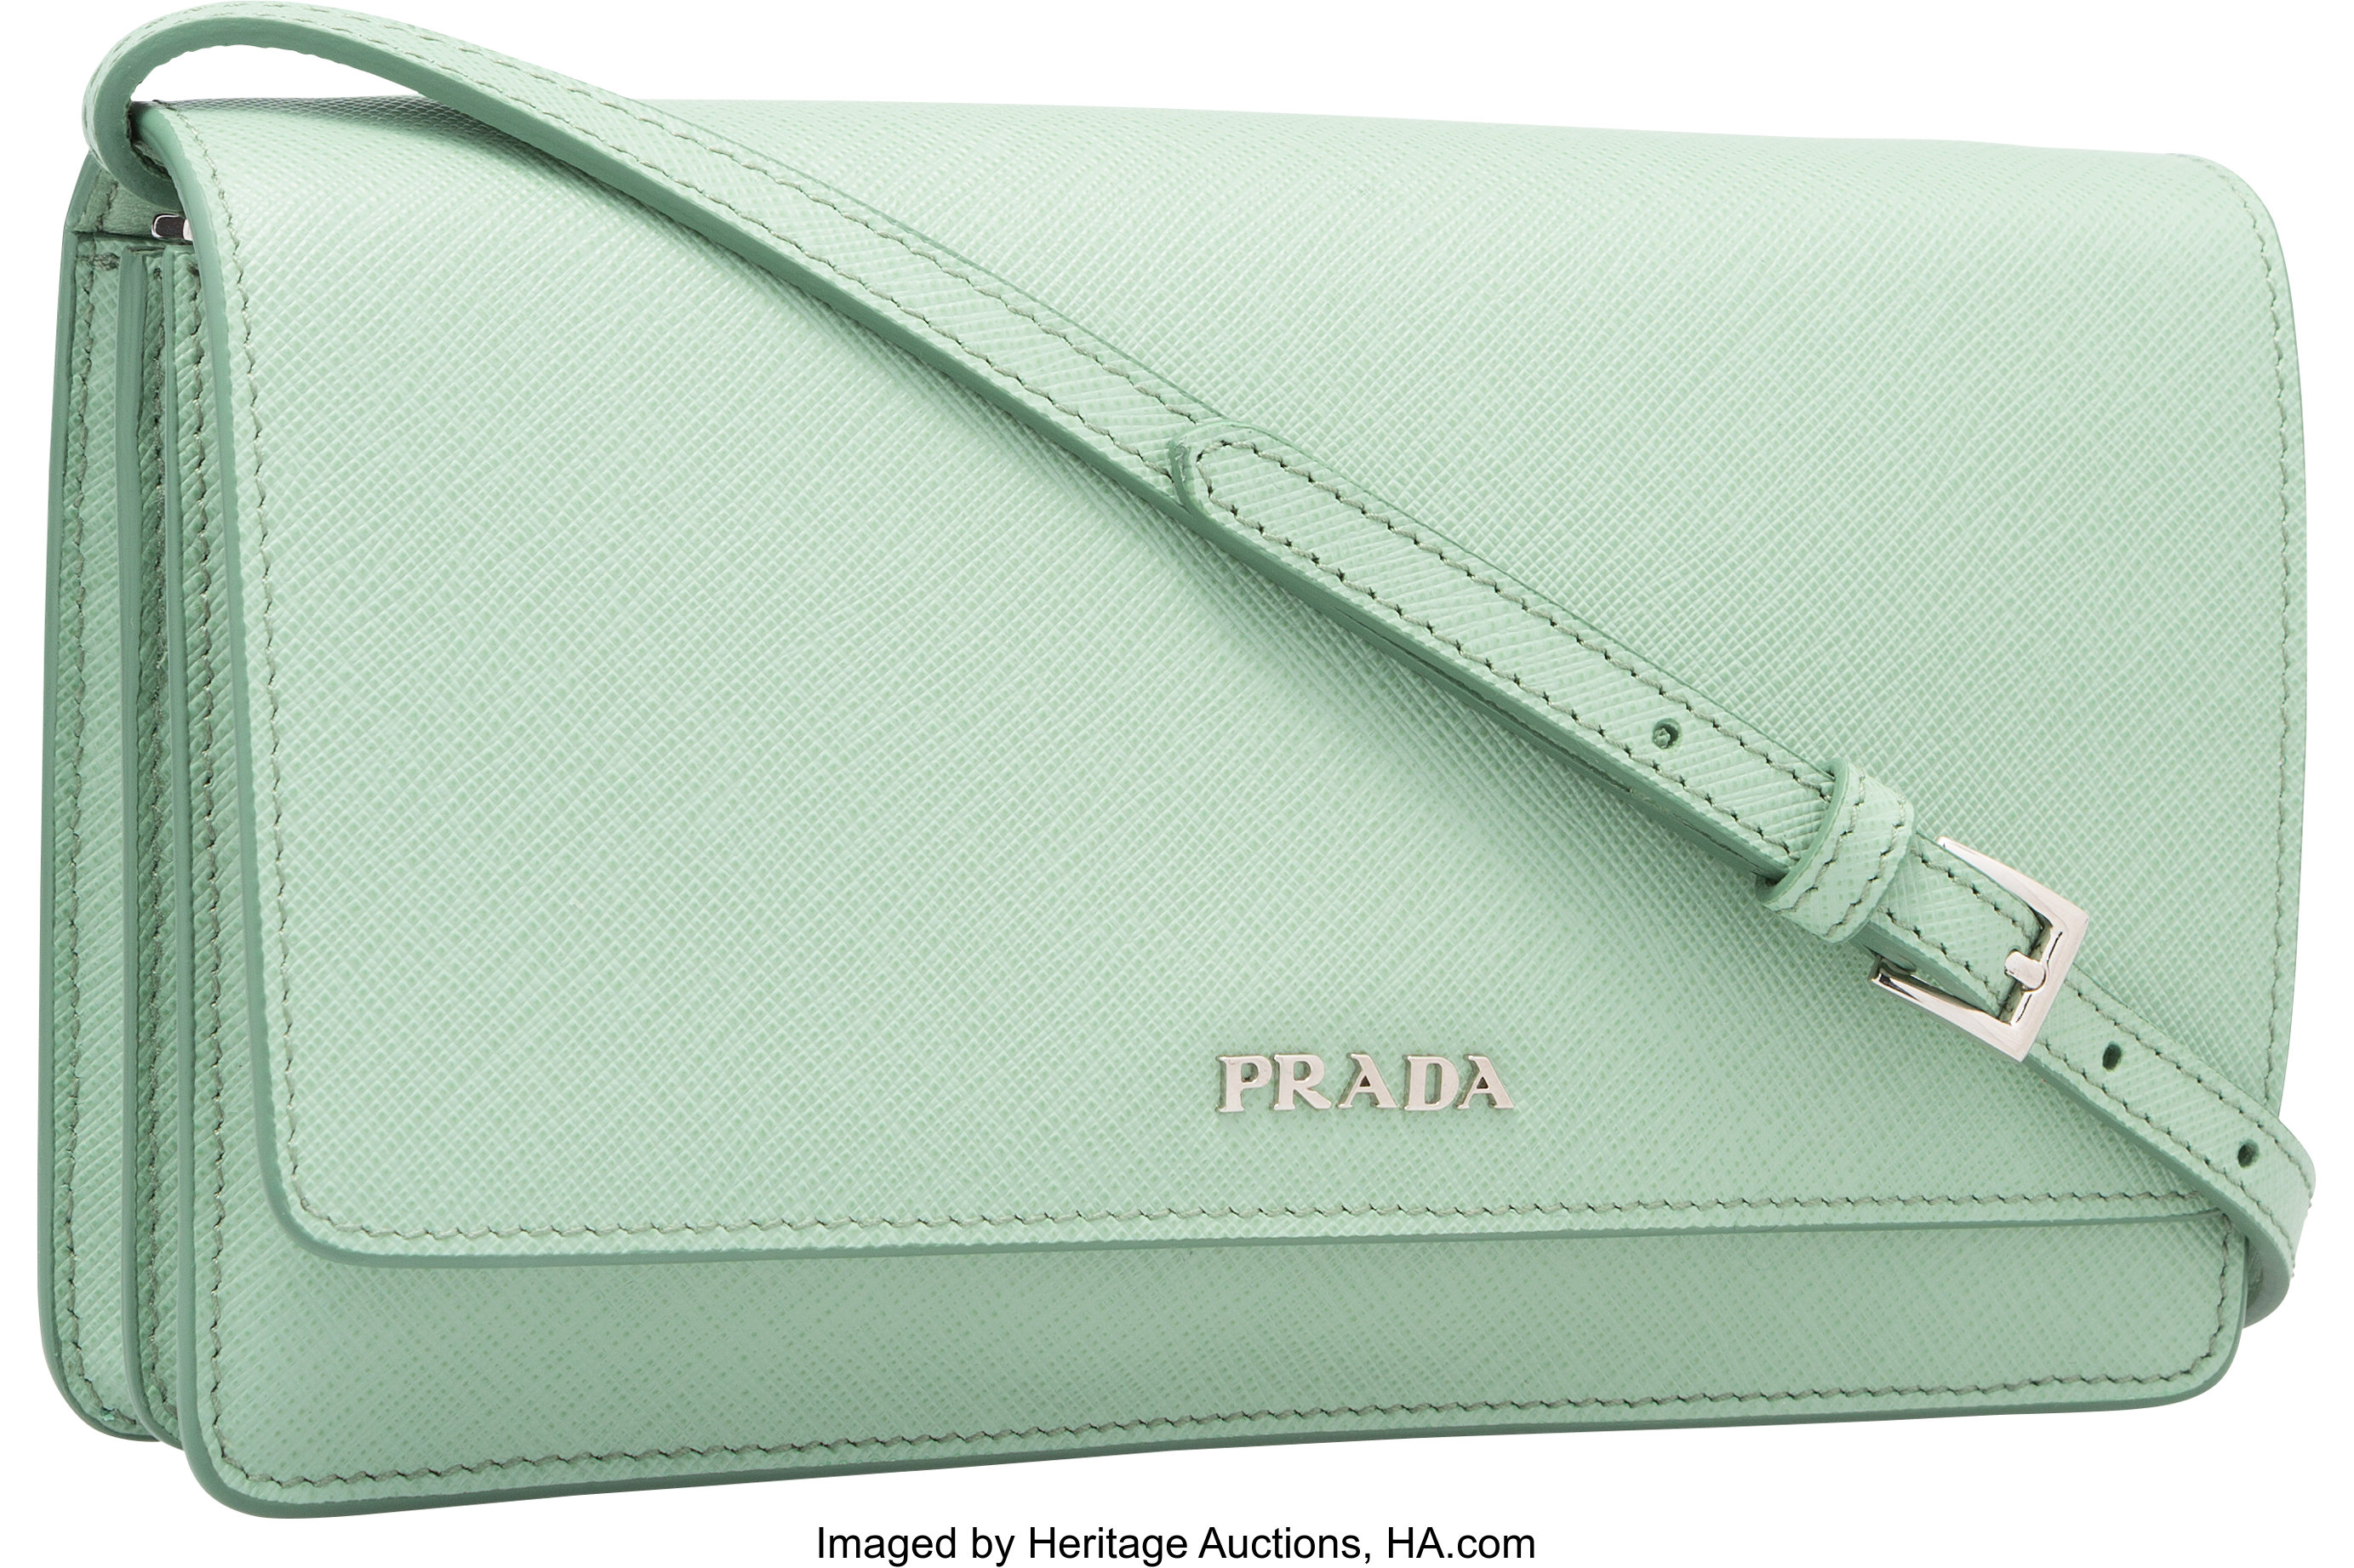 Prada Mint Saffiano Leather Crossbody Bag. Pristine Condition. 8